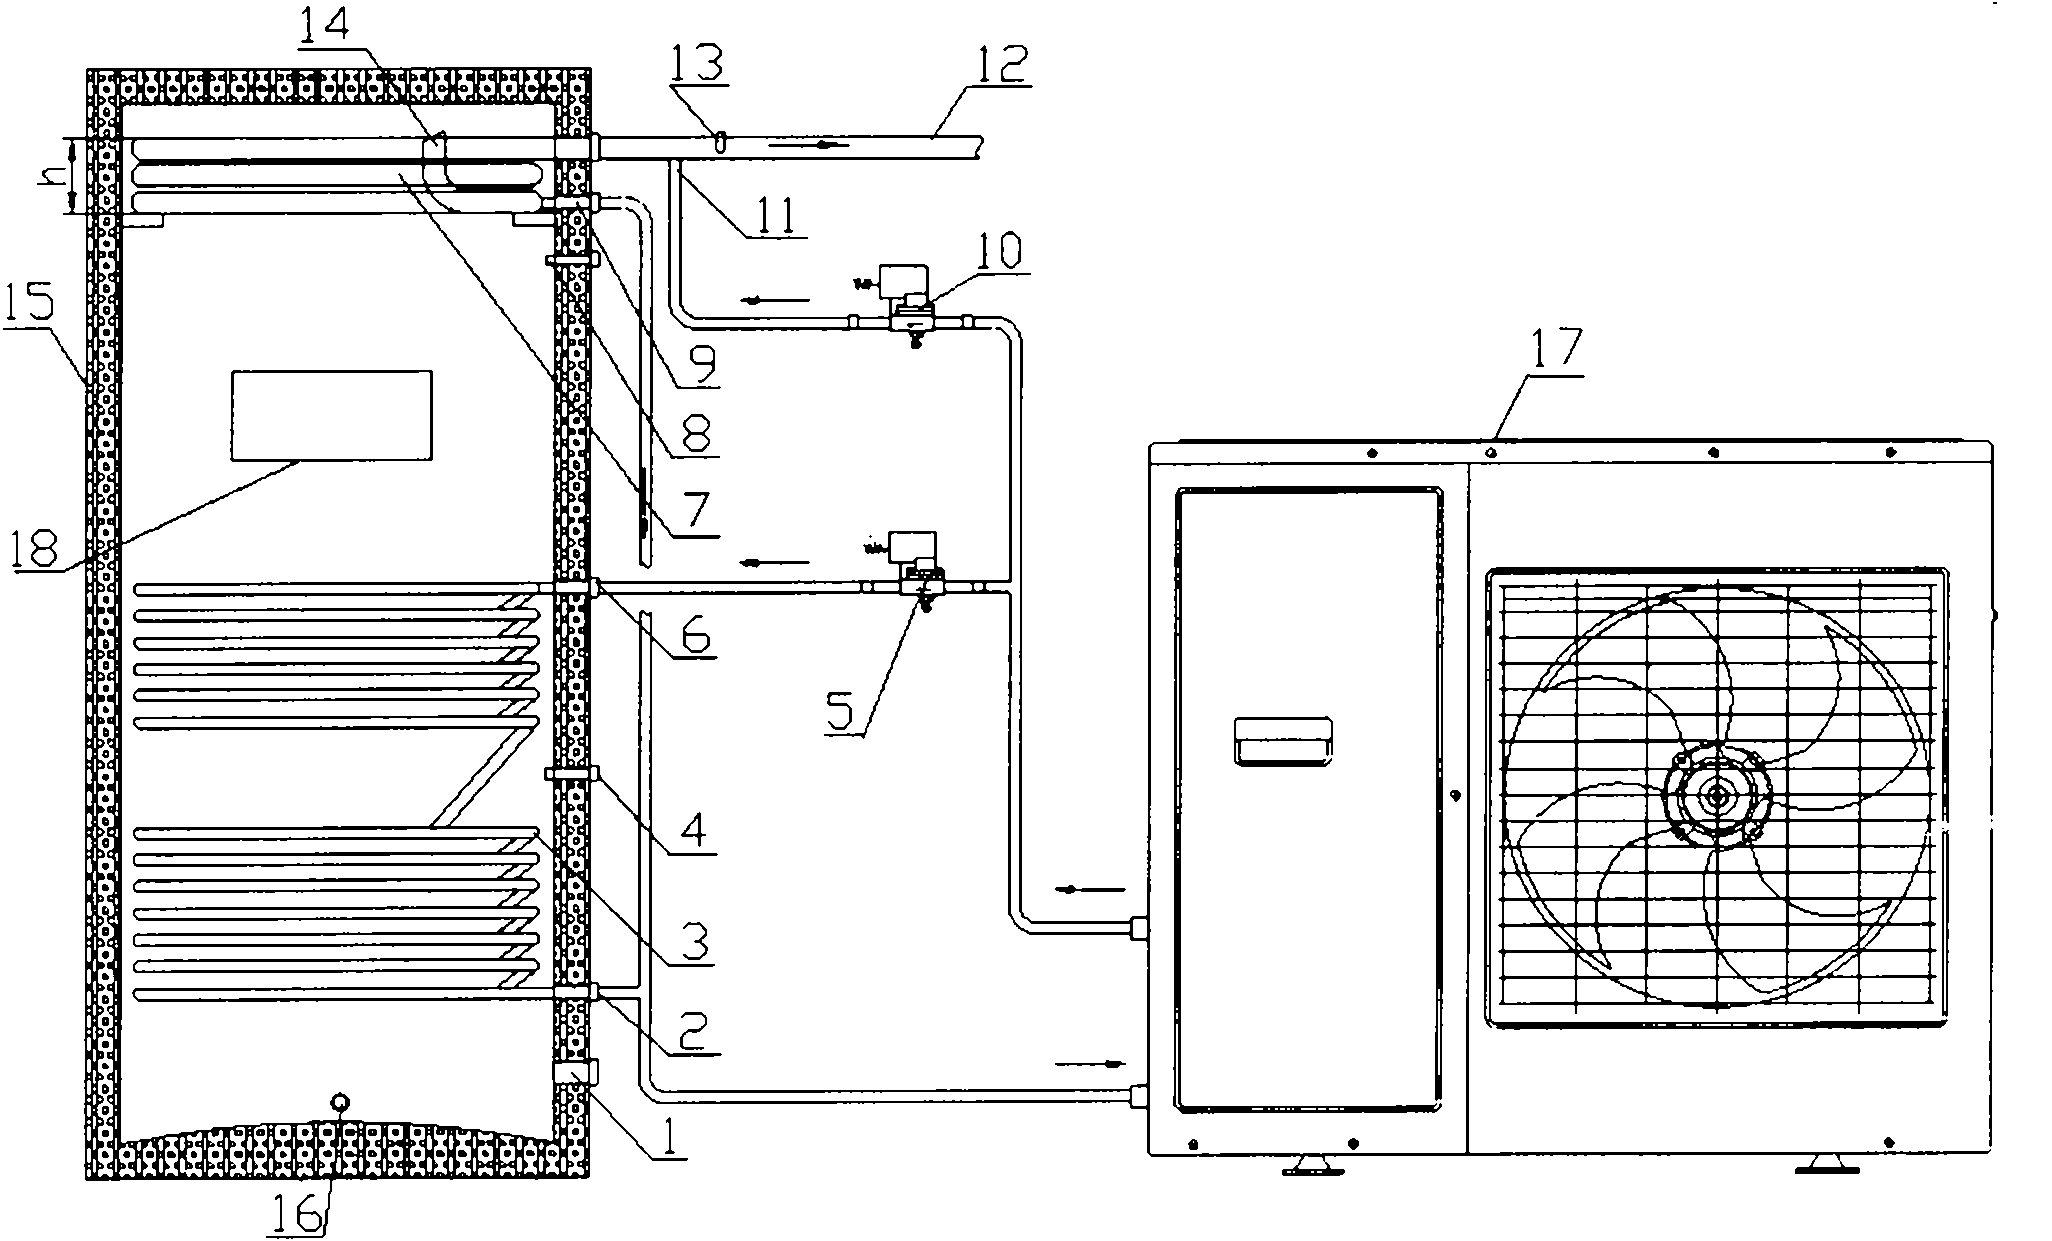 Multi-stage self-adaptive household heat pump water heater